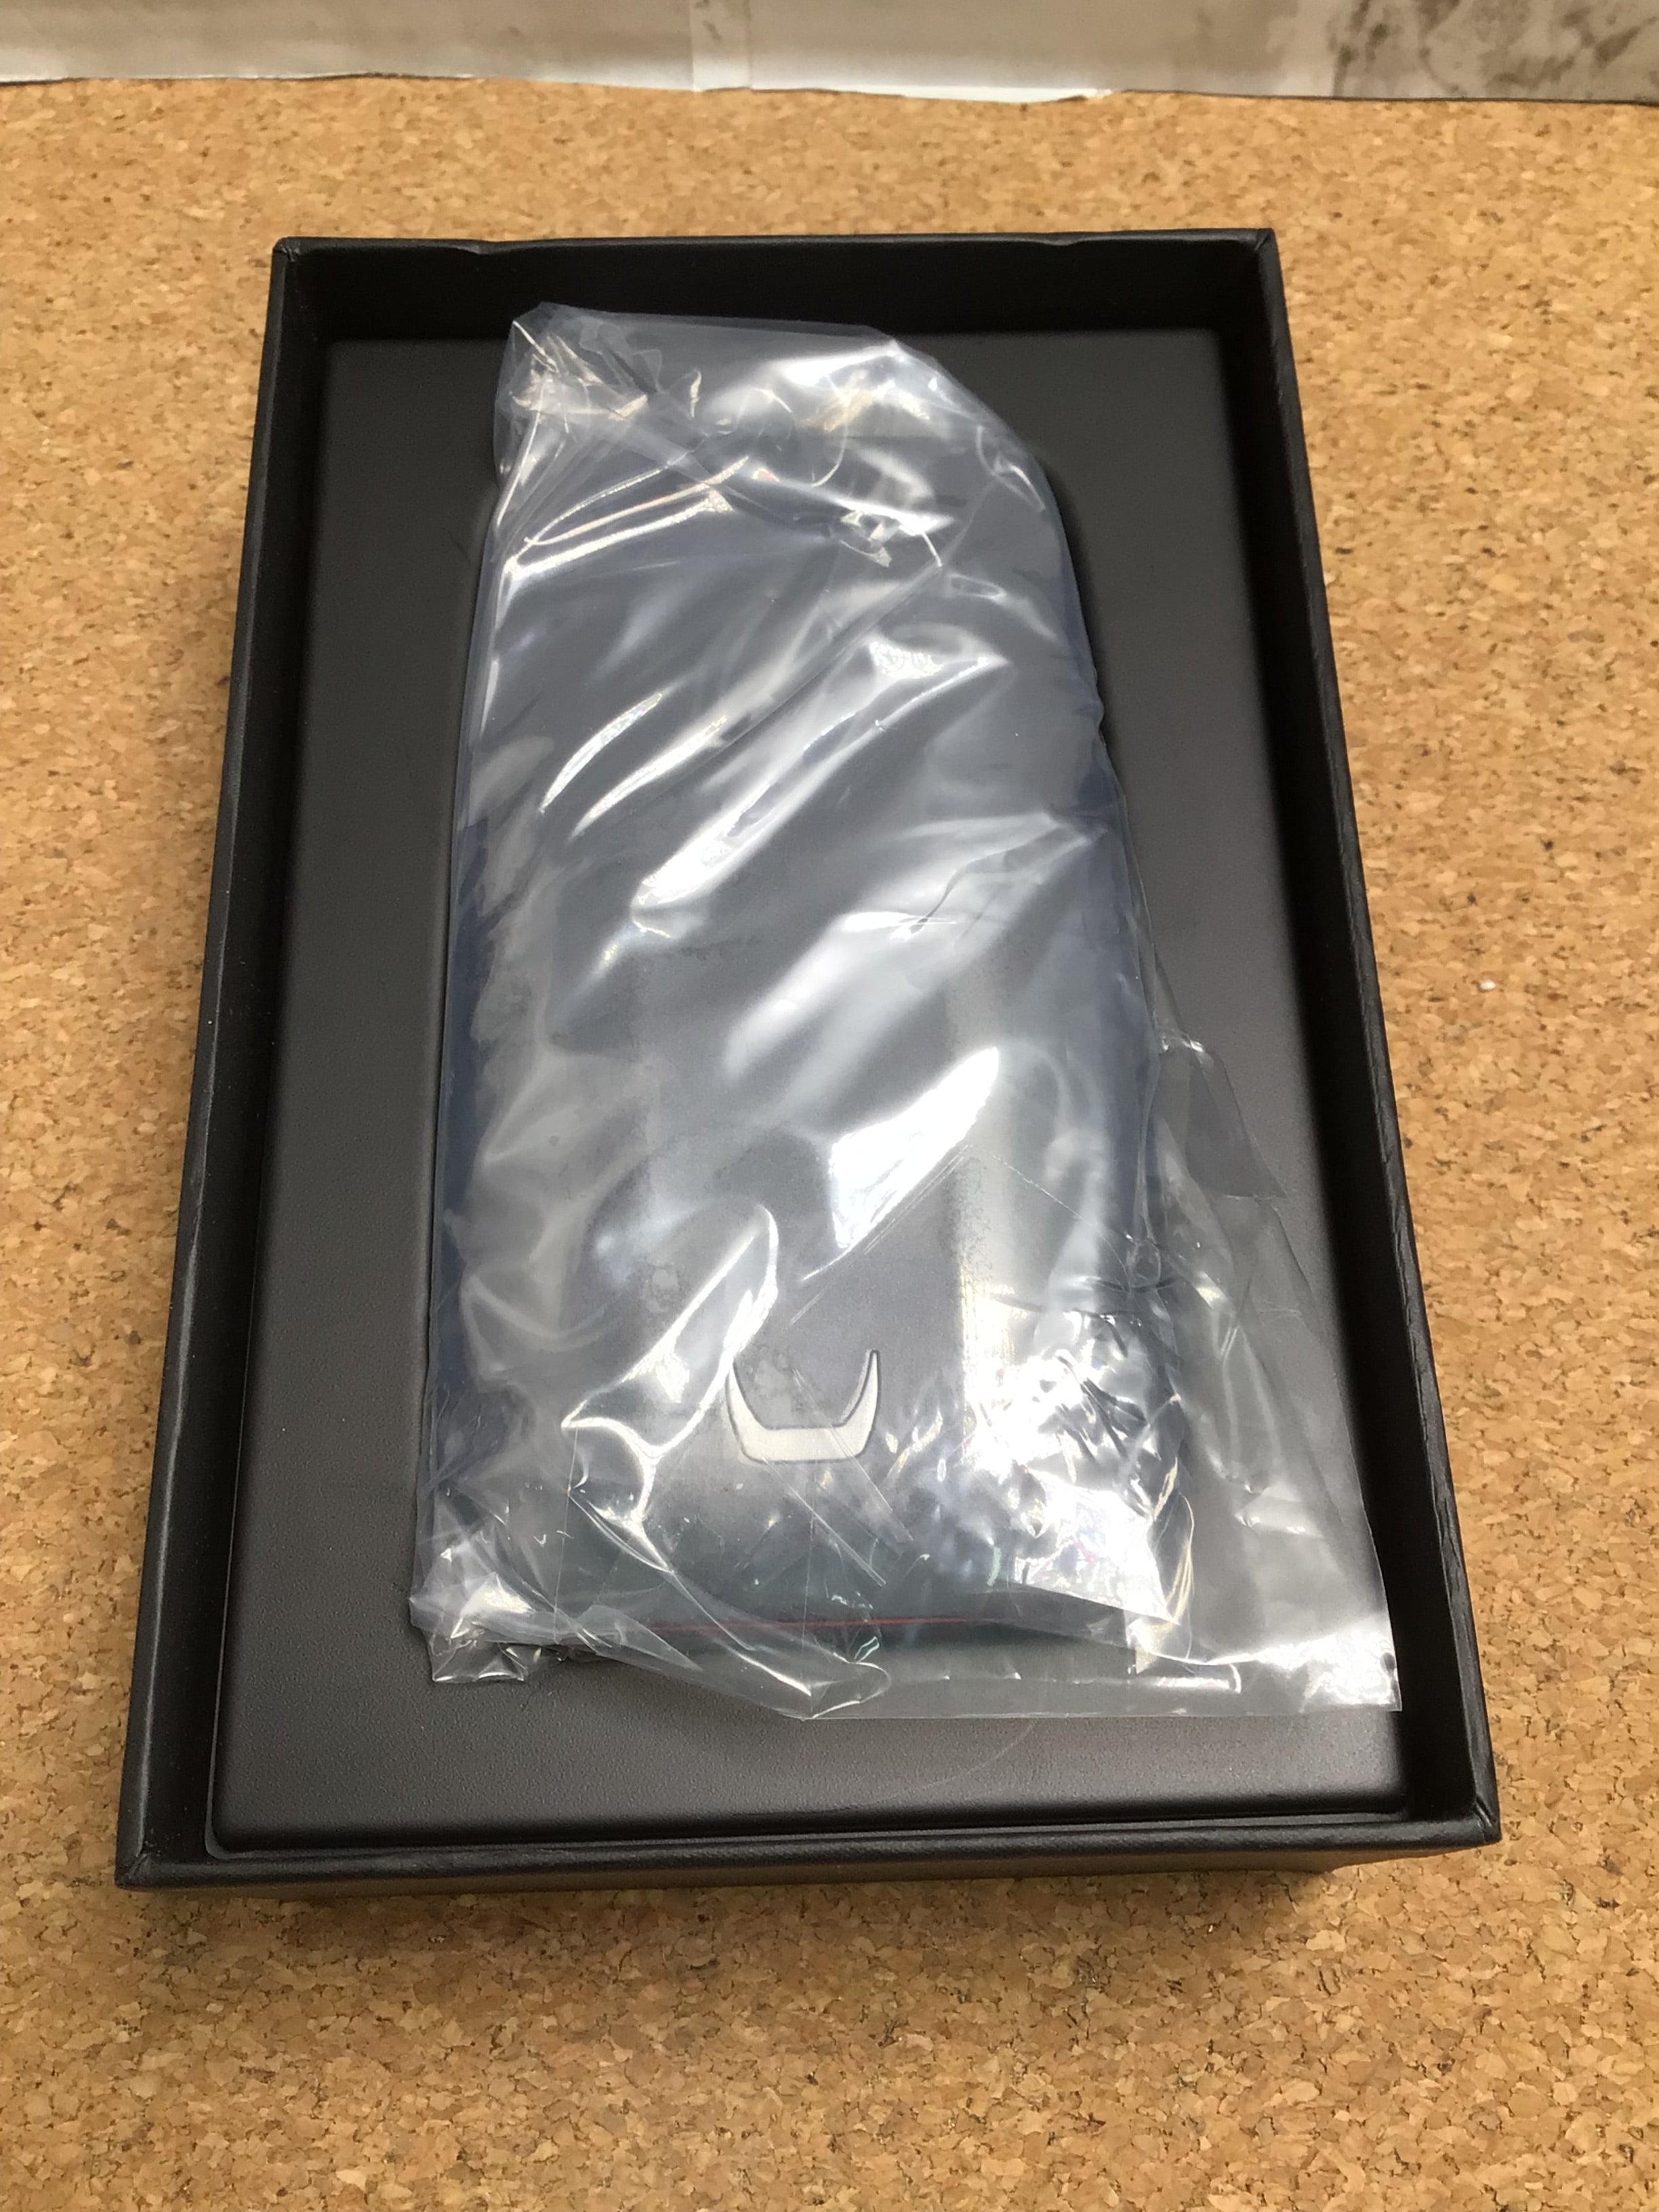 Samsung X5 Portable SSD - 500GB - Thunderbolt 3 External SSD (MU-PB500B/AM) Gray/Red (7927772381422)